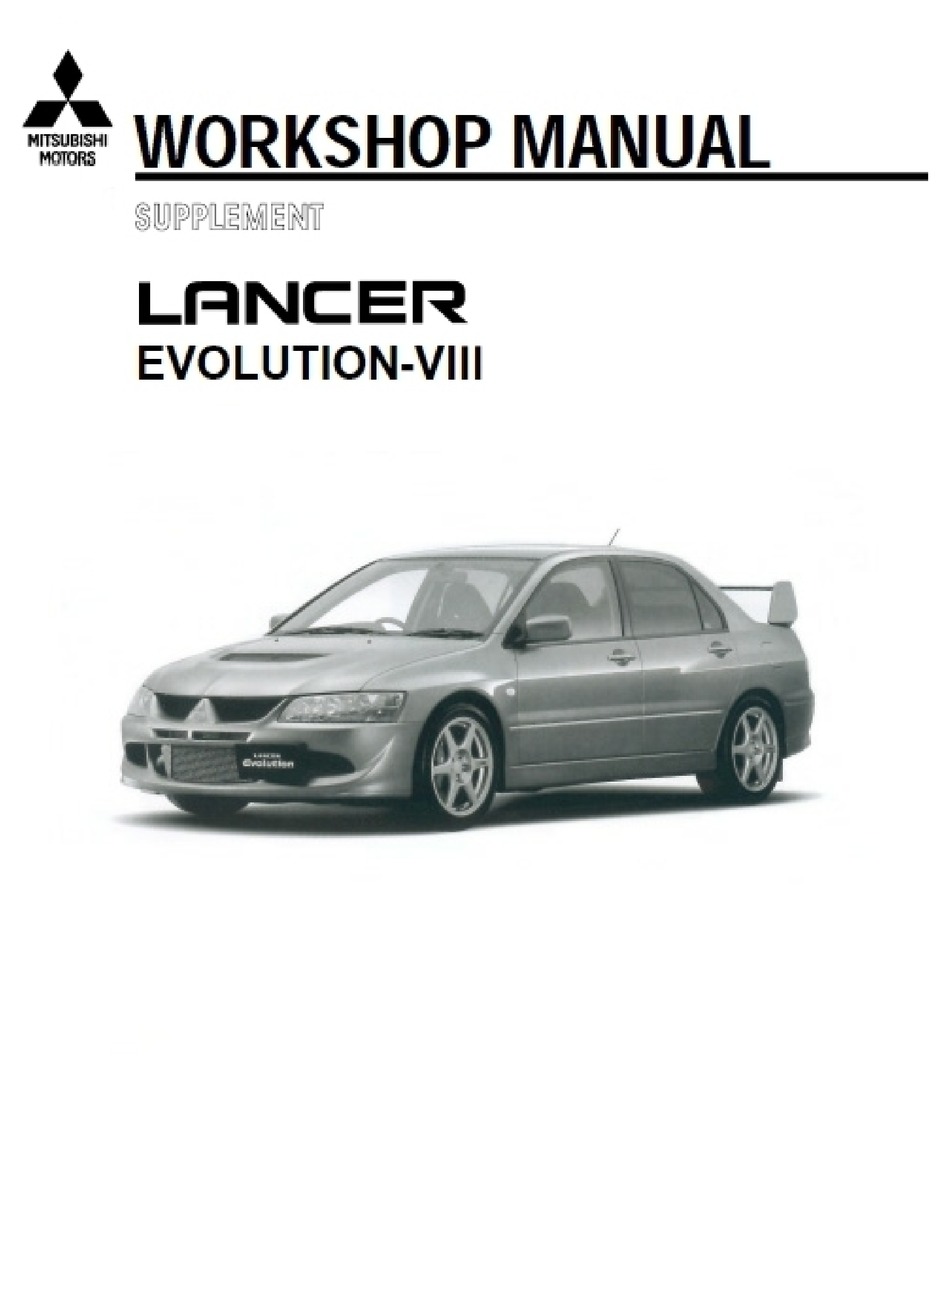 MITSUBISHI LANCER EVOLUTION IX HANDBOOK OWNERS MANUAL 2005-2009 WALLET # G-821 